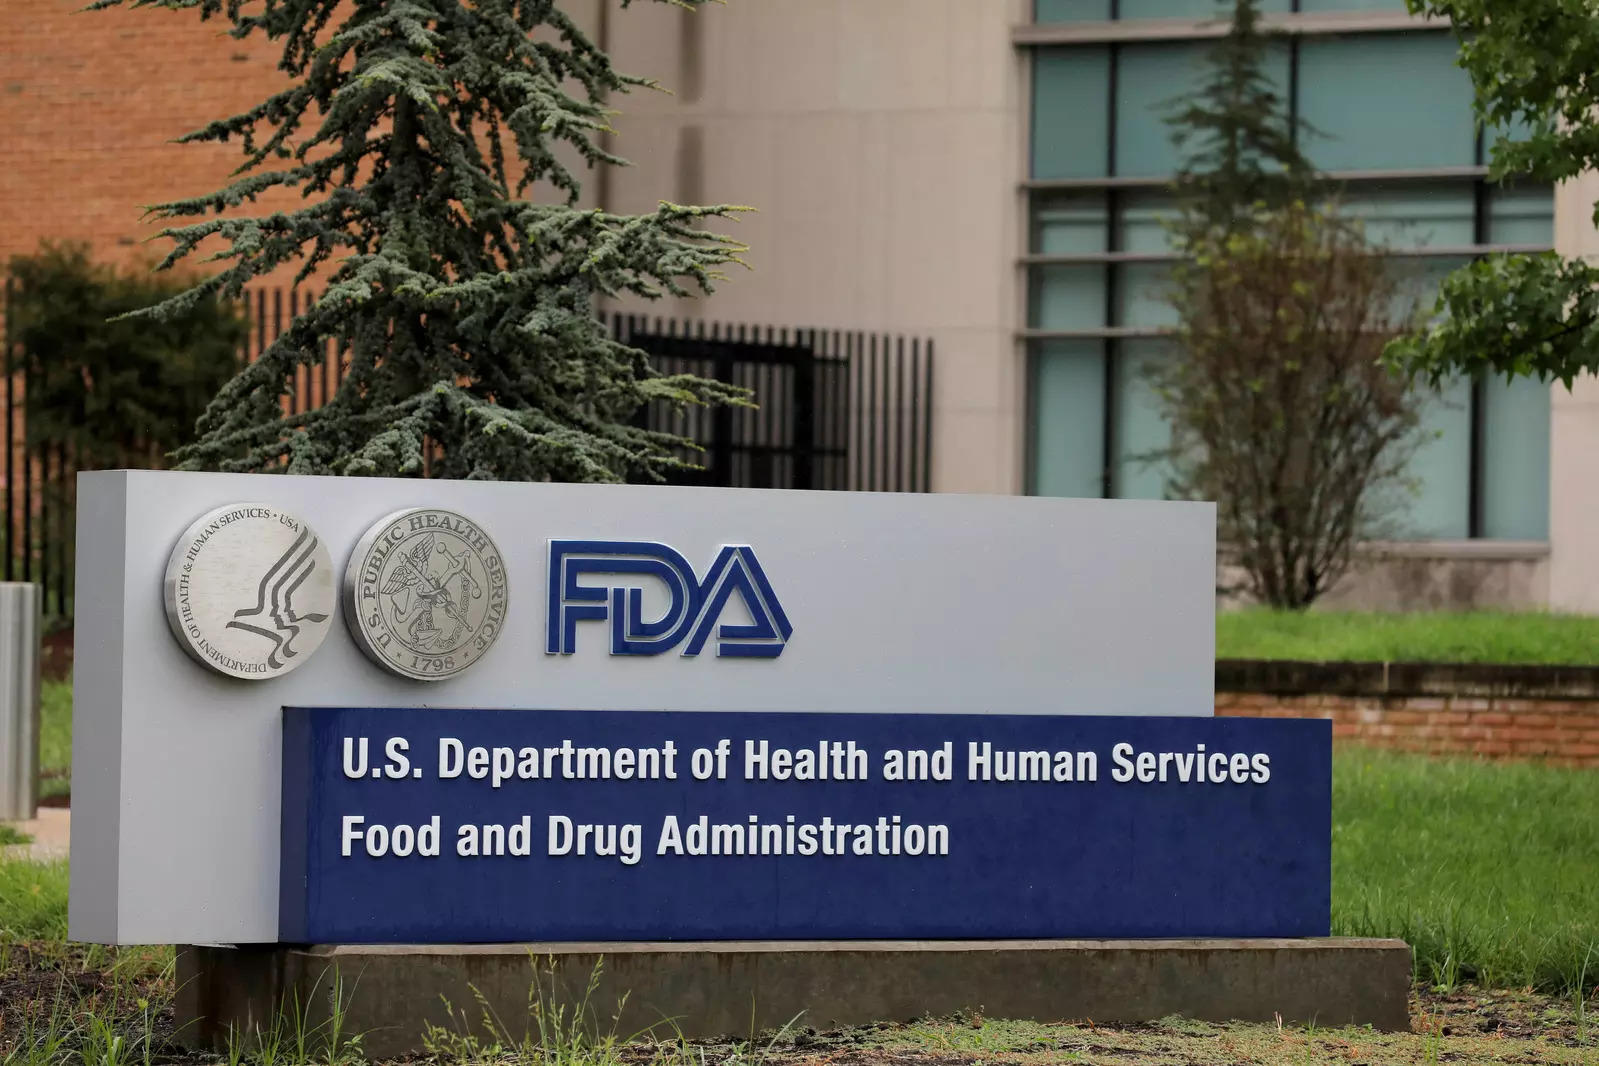 Bubs Australia is seeking permanent market access from the US FDA